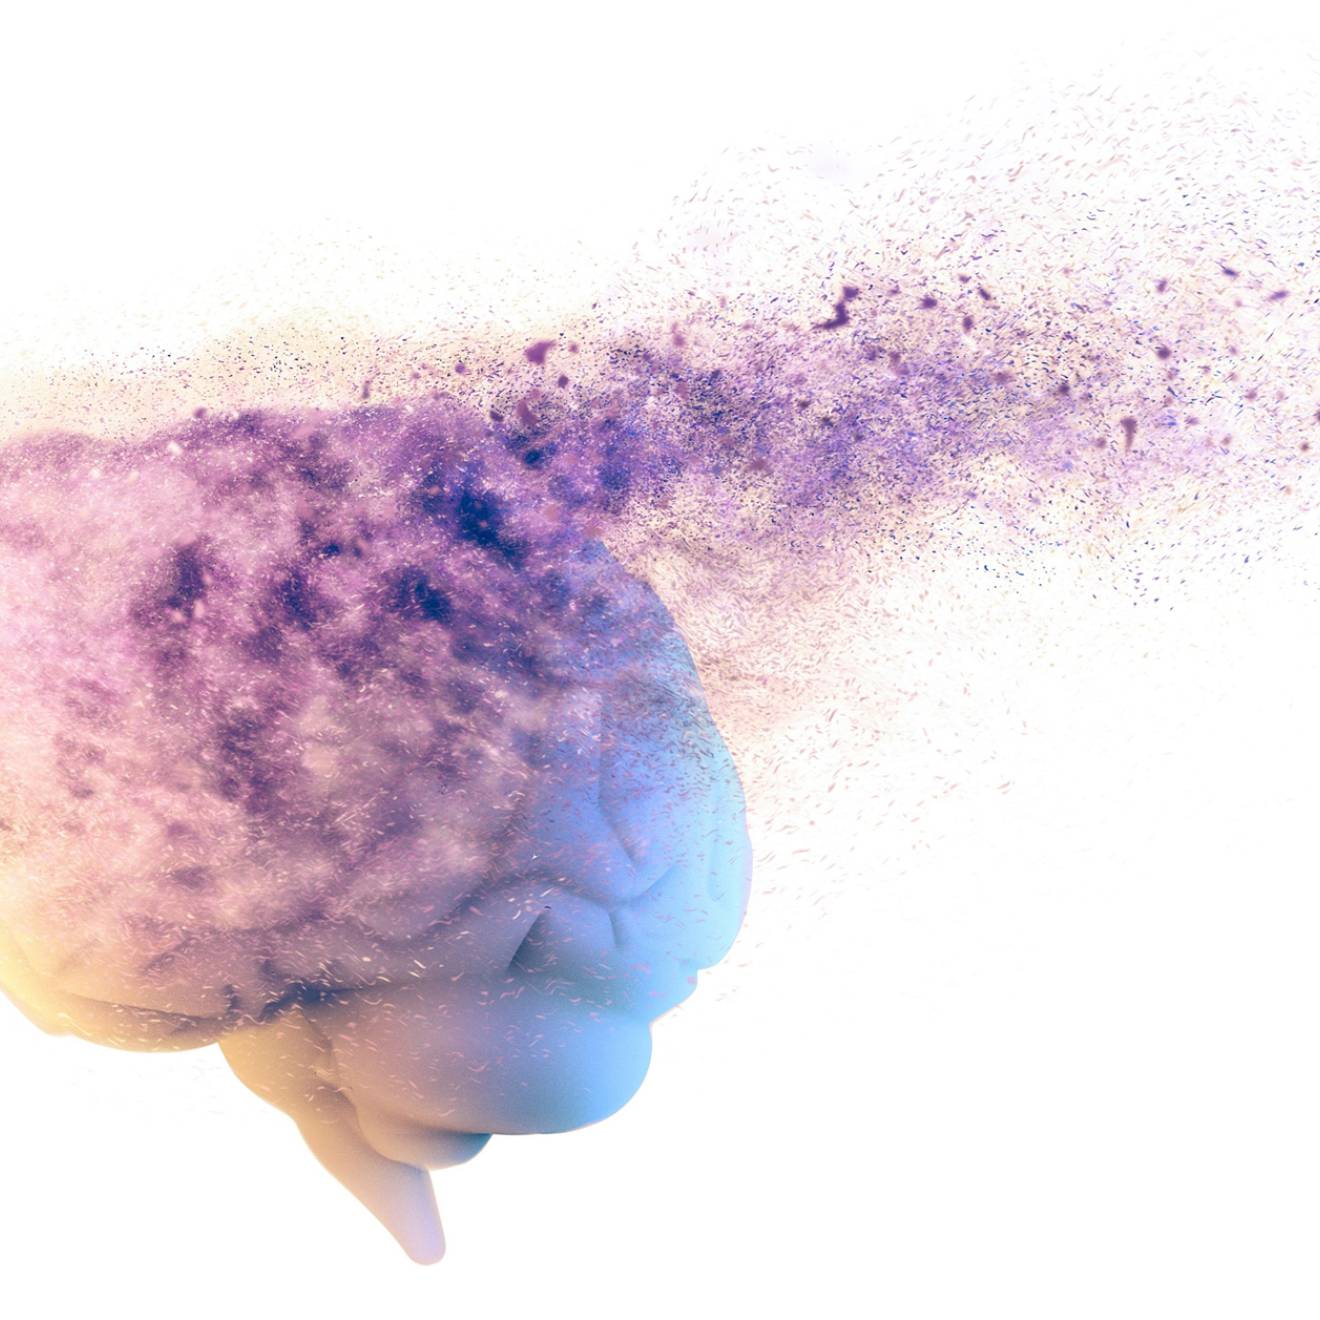 An image of a purple brain disintegrating